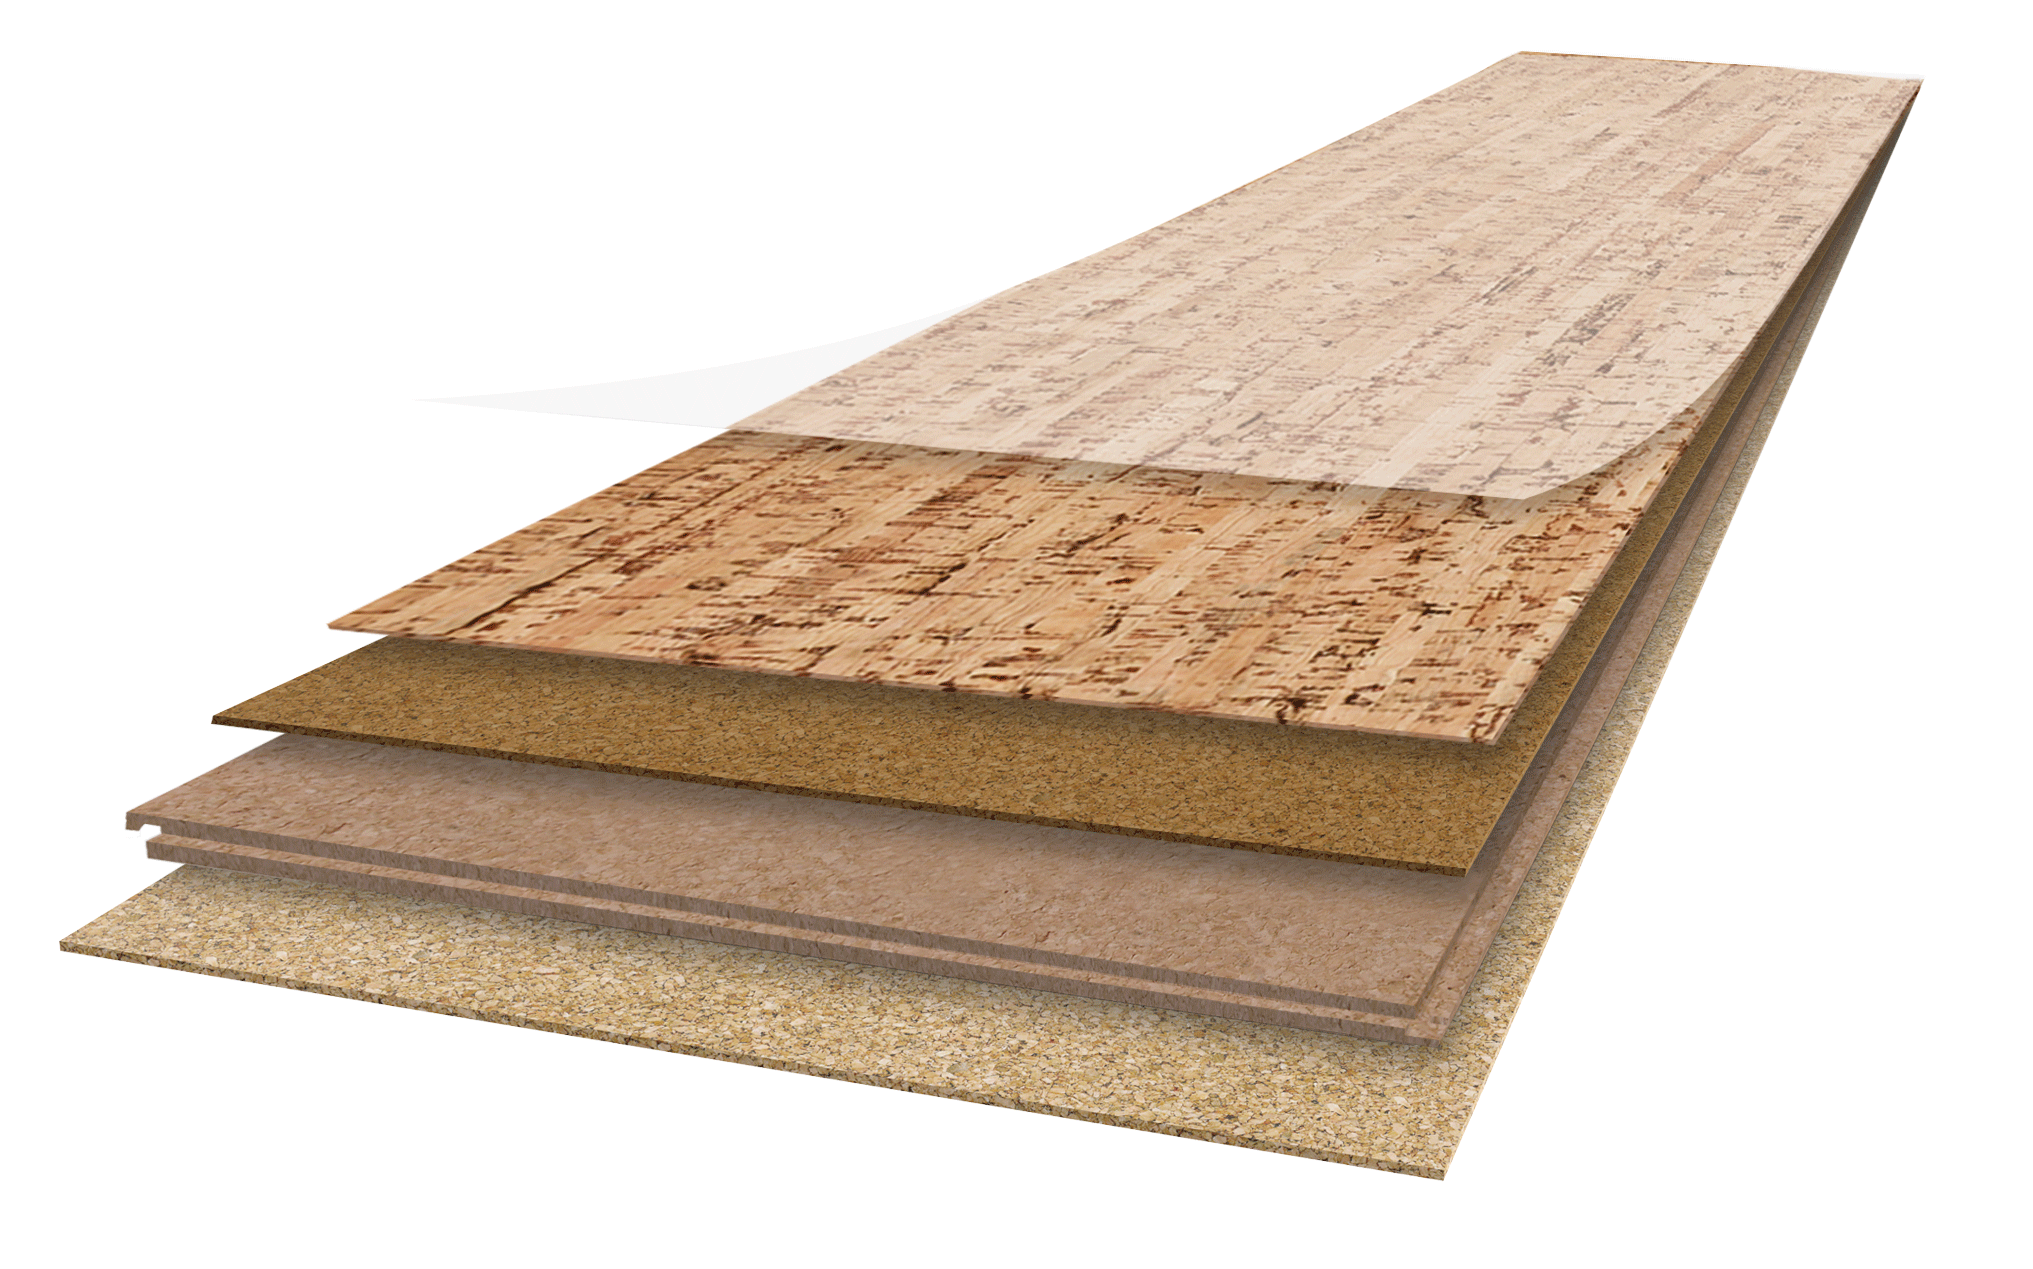 Amorim Cork Flooring